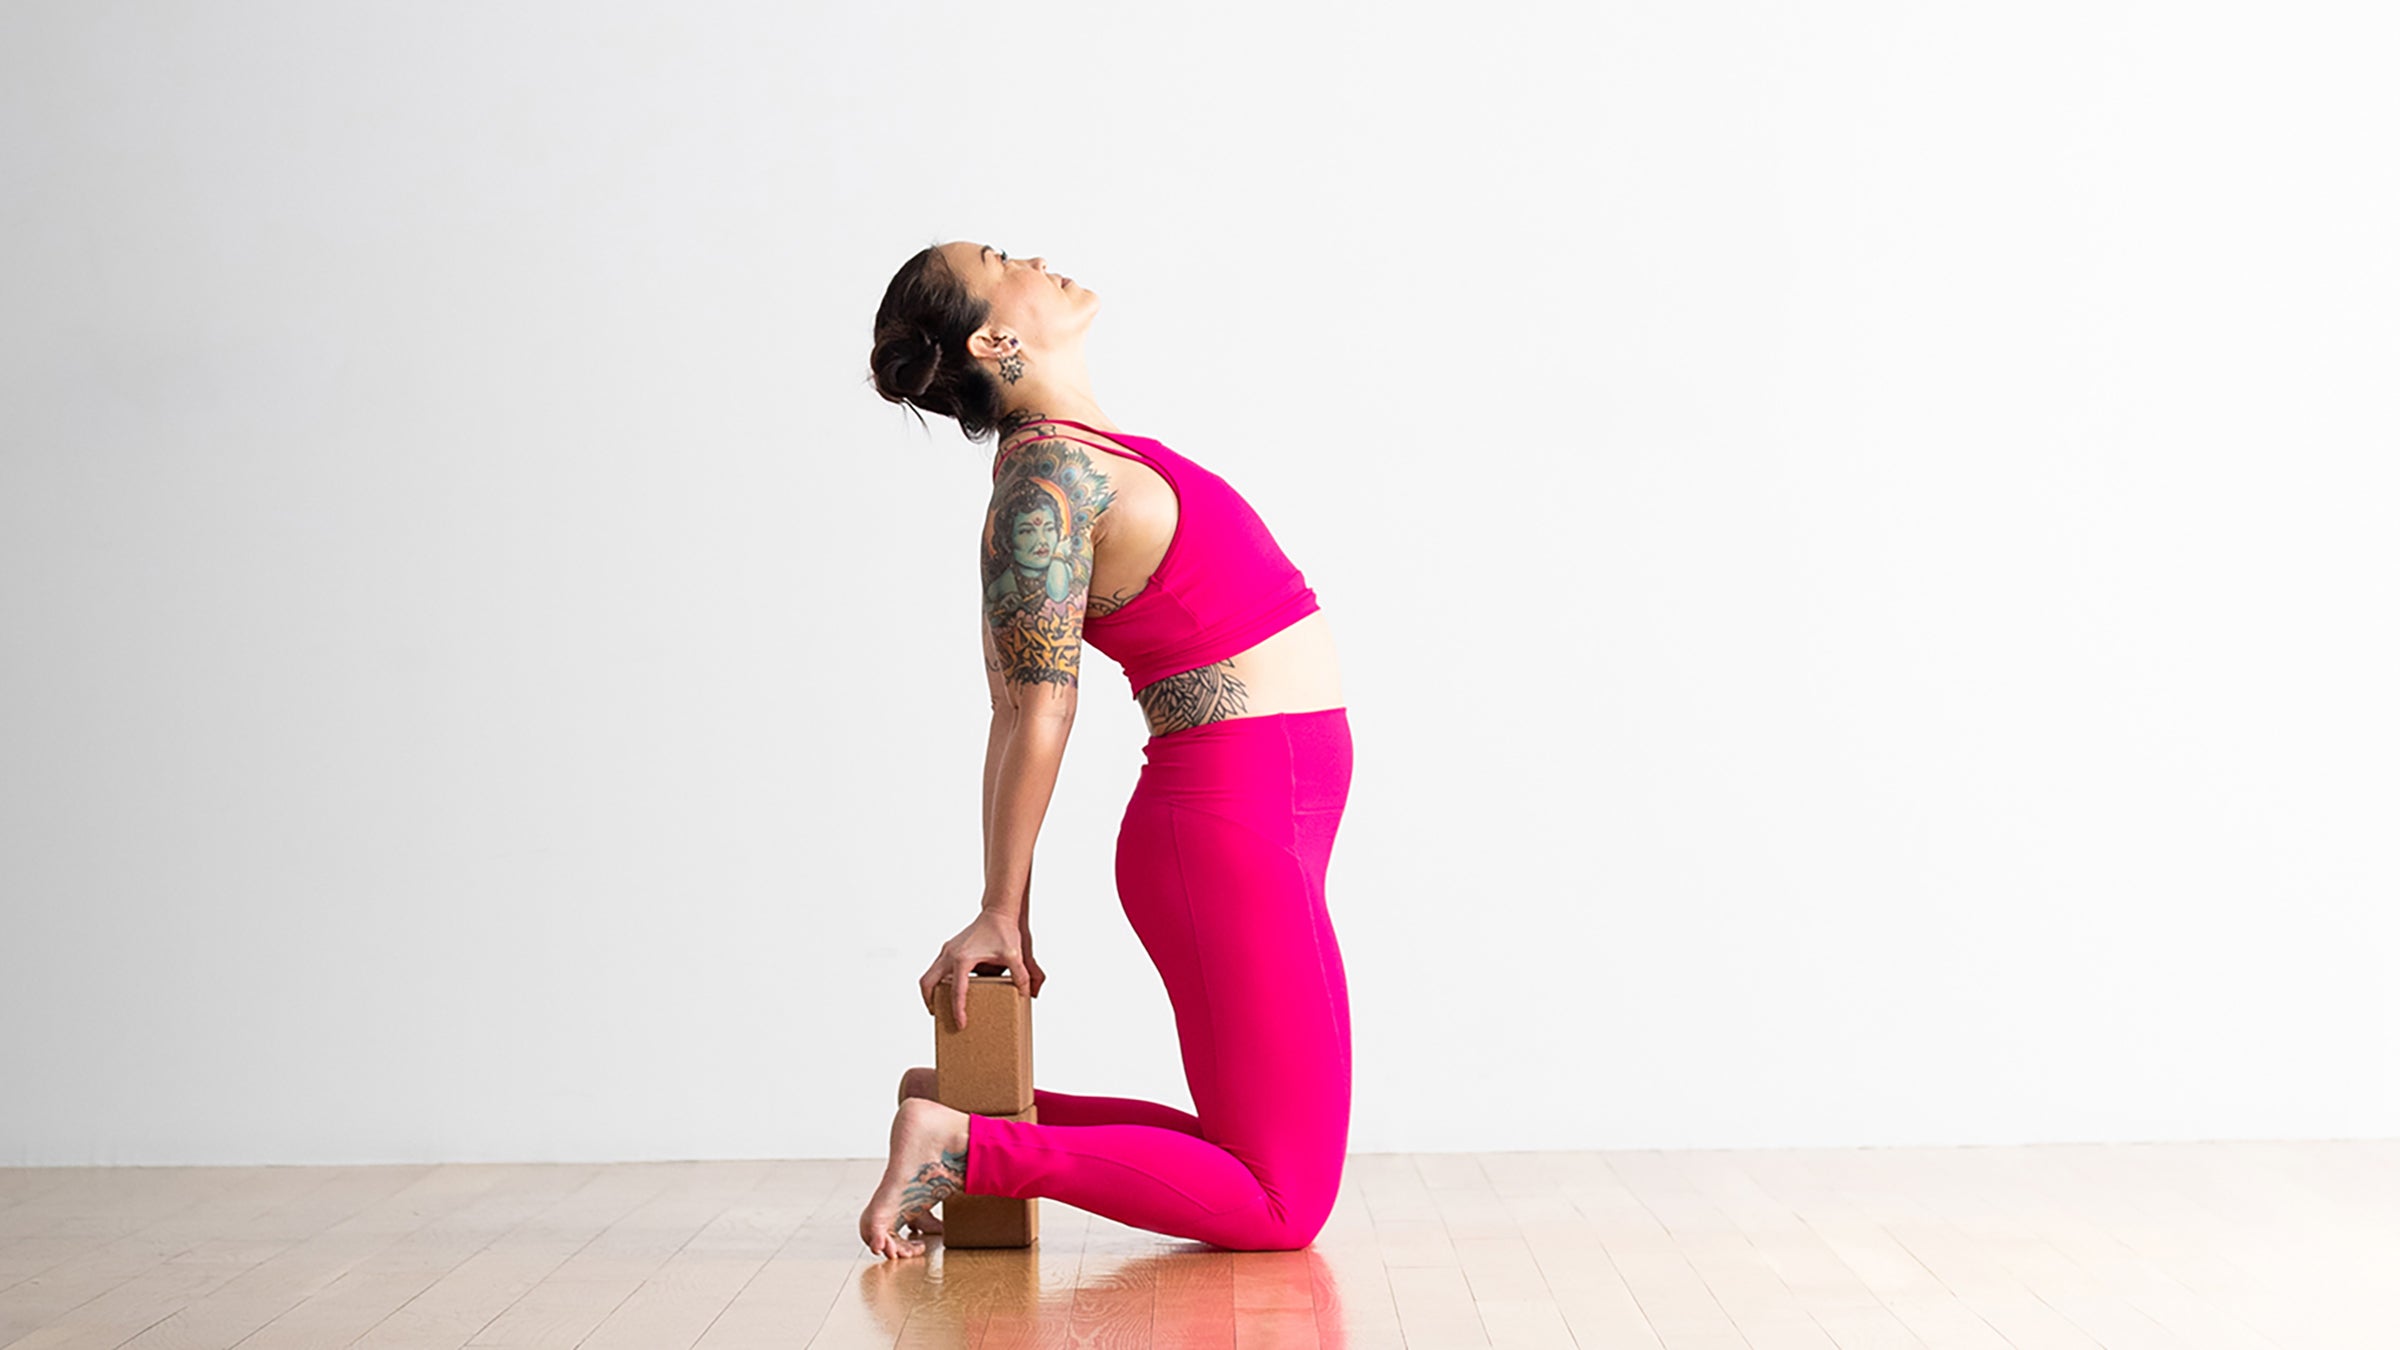 Deep sequence for release of stiff neck & upper back | Yoga Vastu